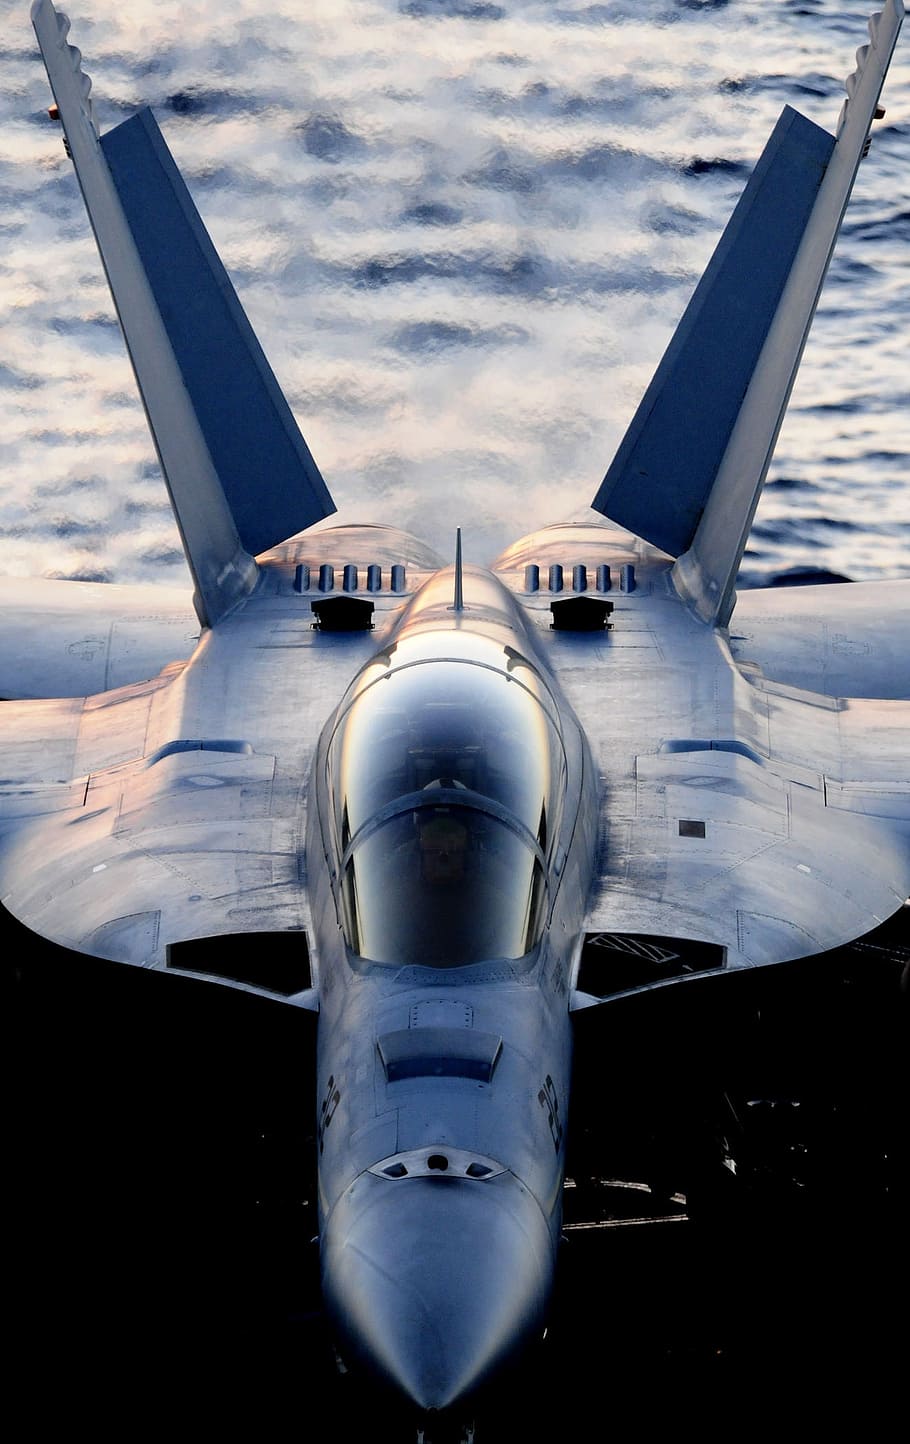 1080p HD Jet Fighter Wallpaper 79 images